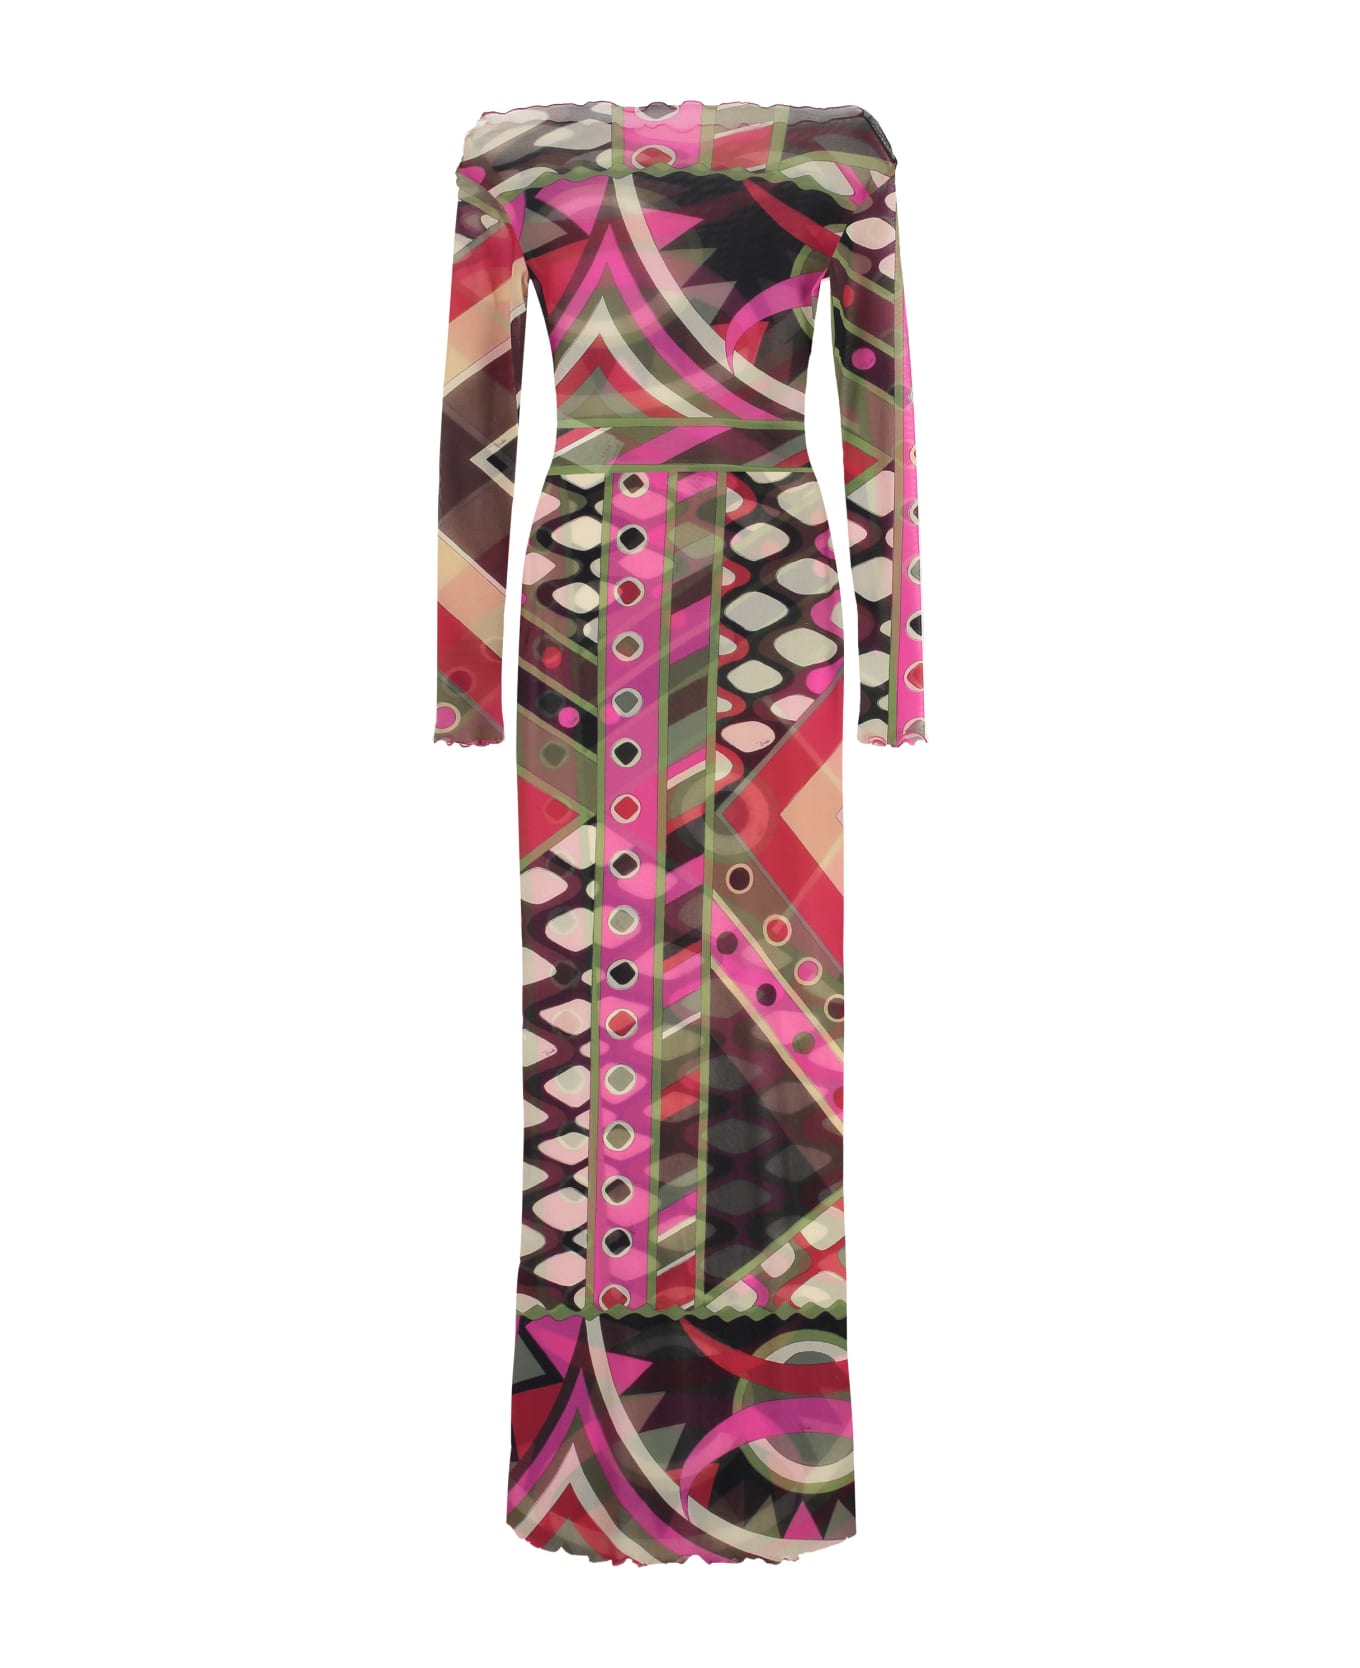 Pucci Printed Mesh Dress - Multicolor